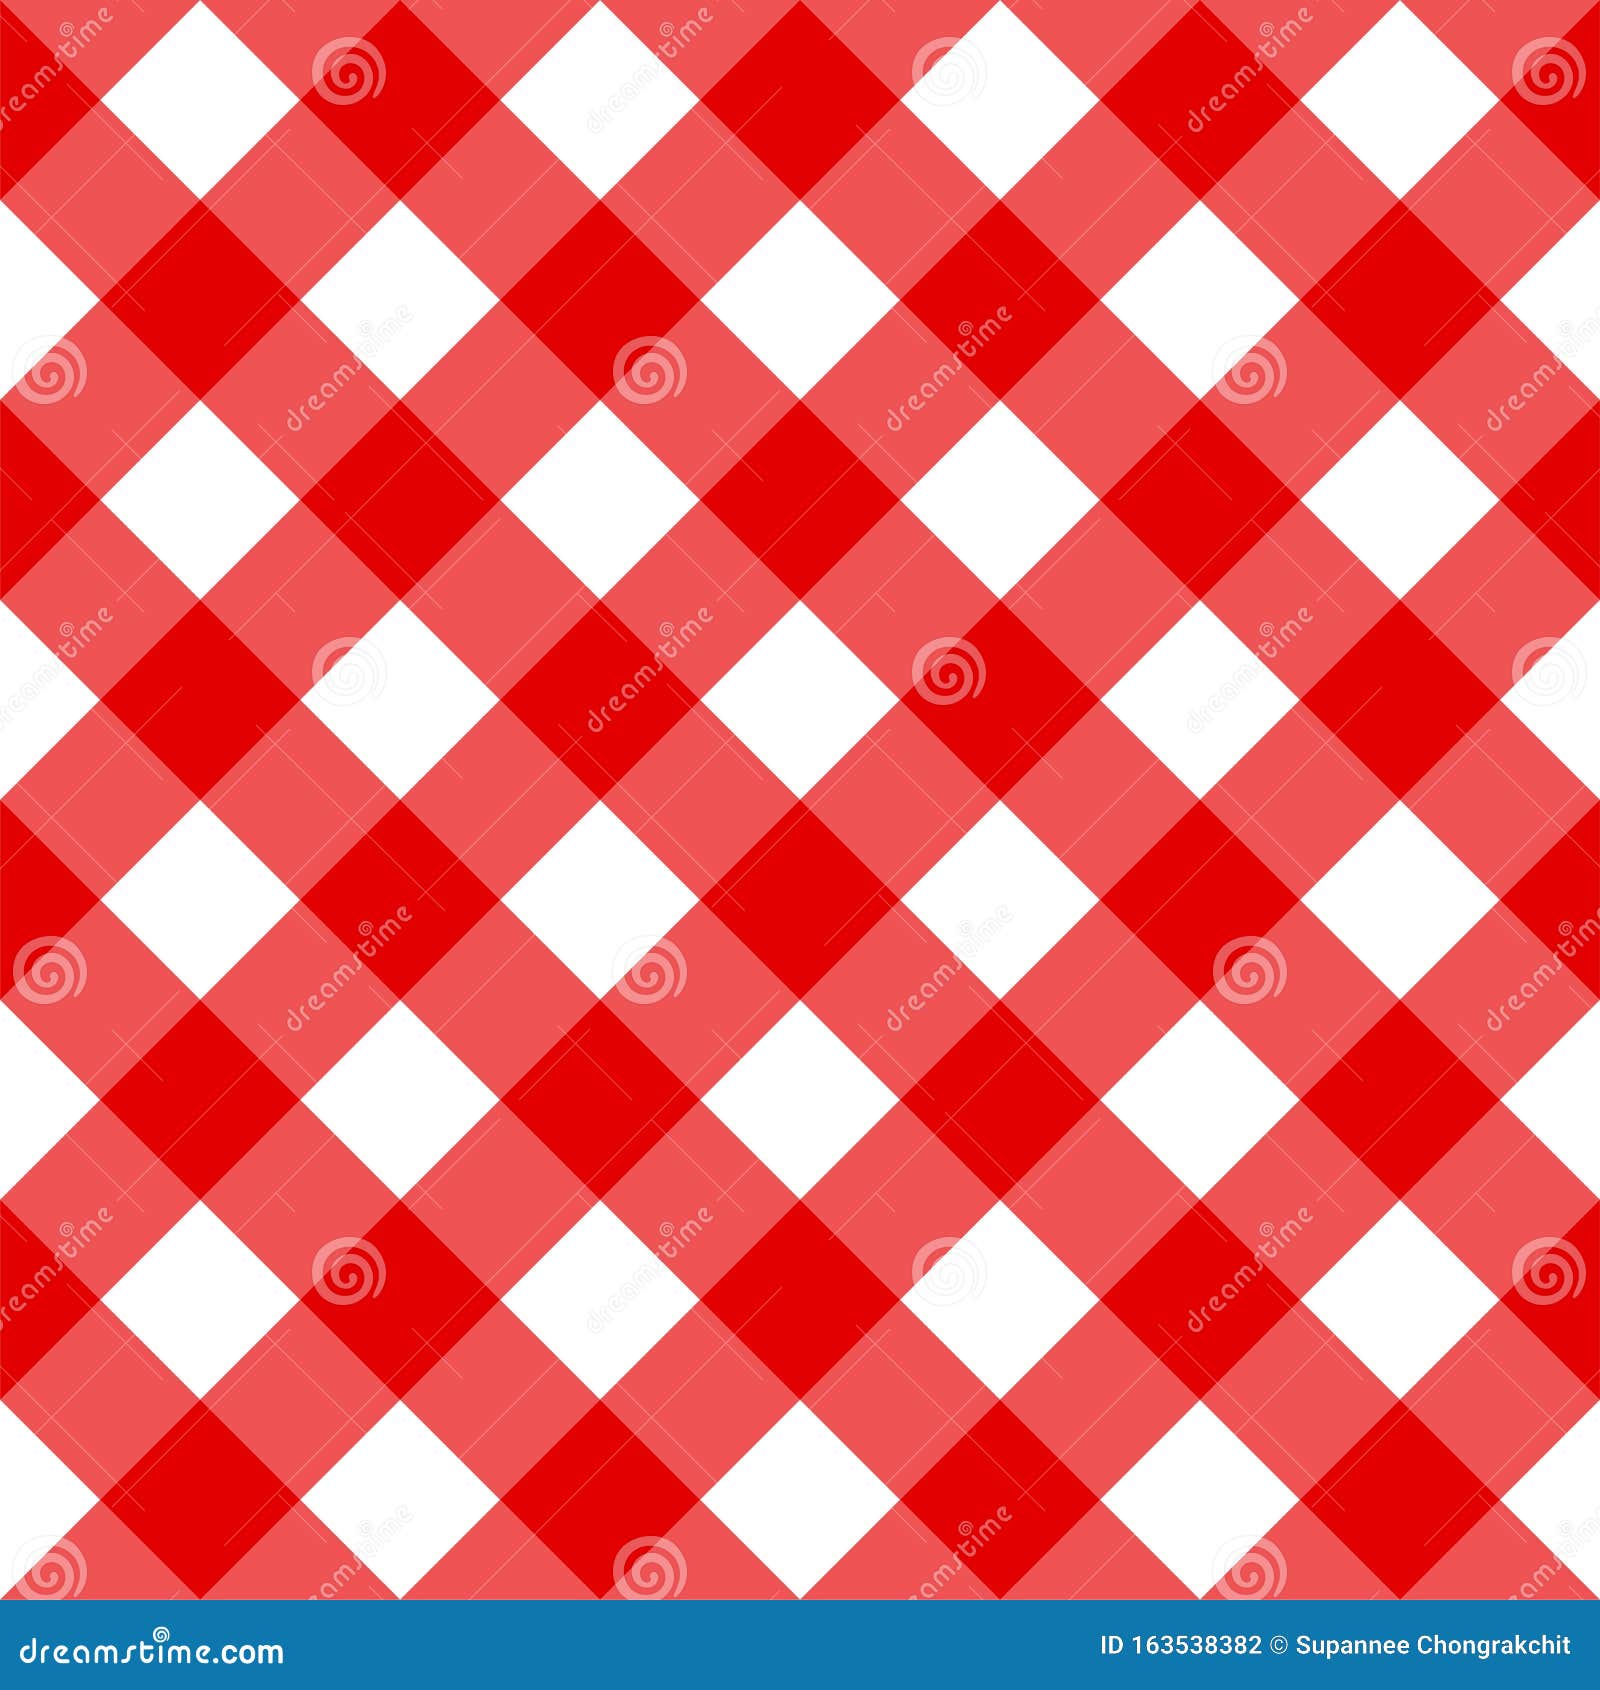 Red Tartan Check Plaid Seamless Patterns Stock Illustration ...